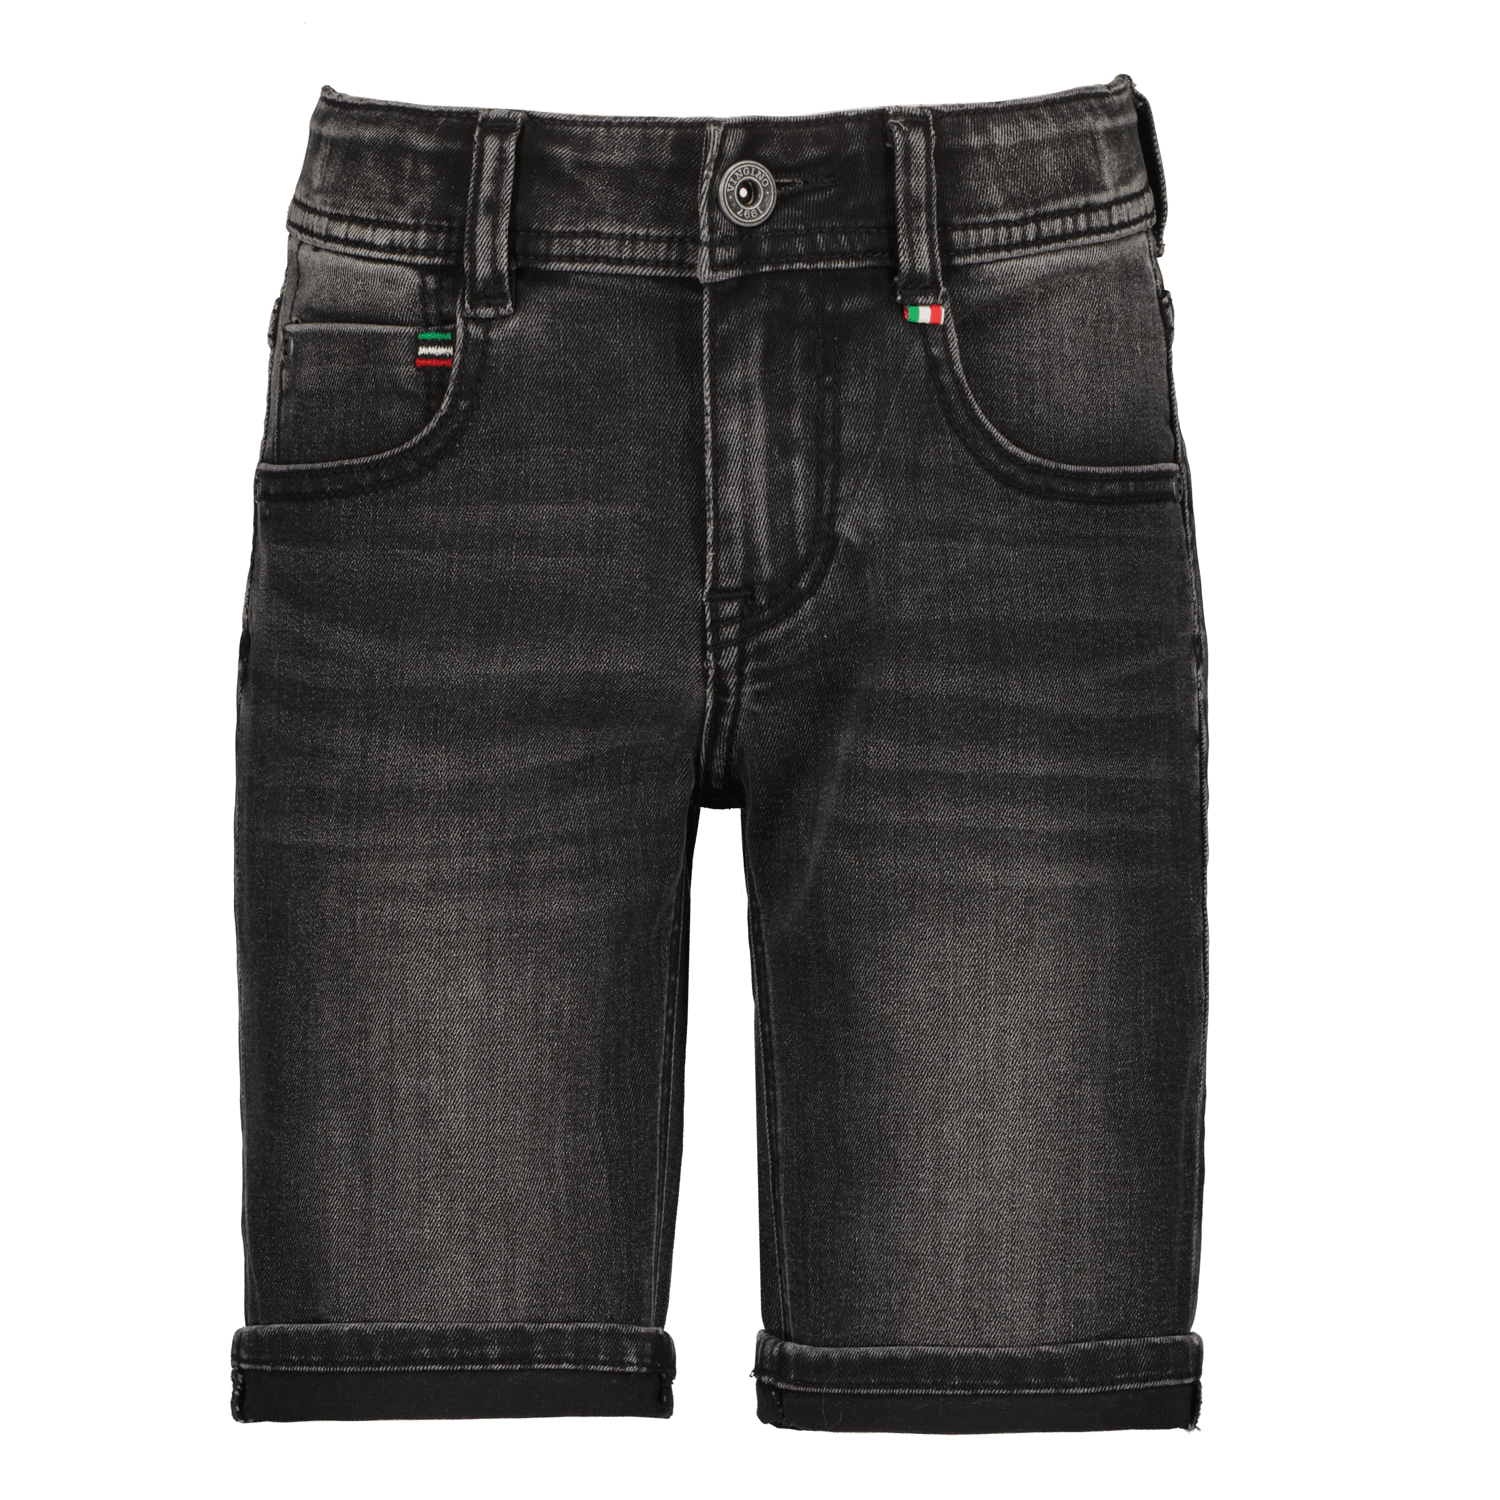 VINGINO denim short Curzio black vintage Korte broek Zwart Jongens Stretchdenim 140